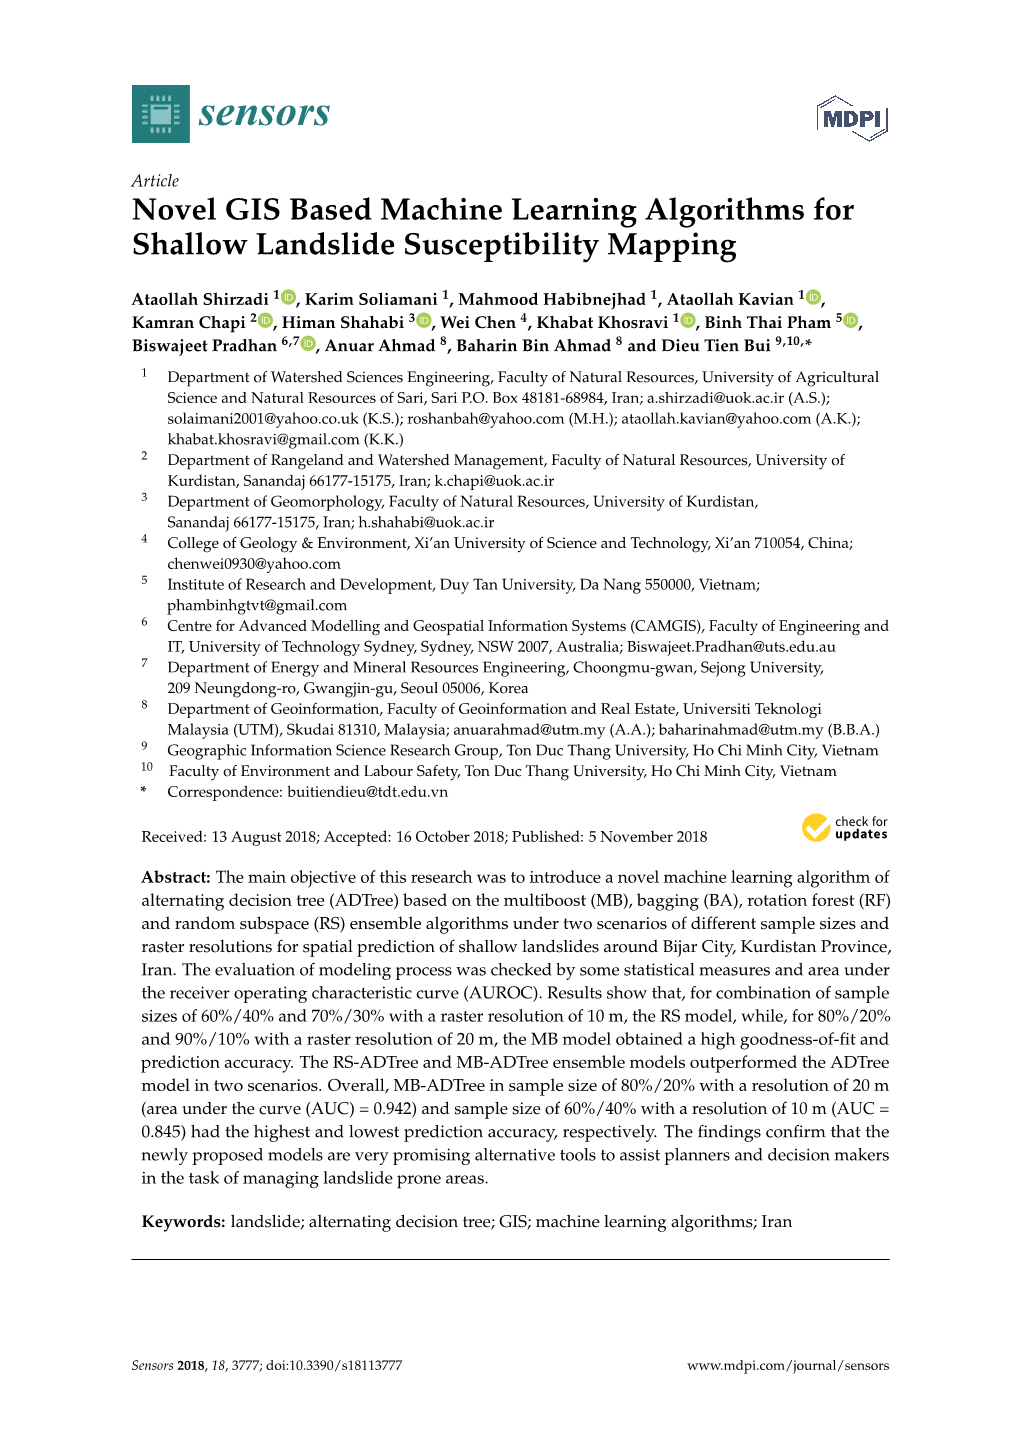 Novel GIS Based Machine Learning Algorithms for Shallow Landslide Susceptibility Mapping